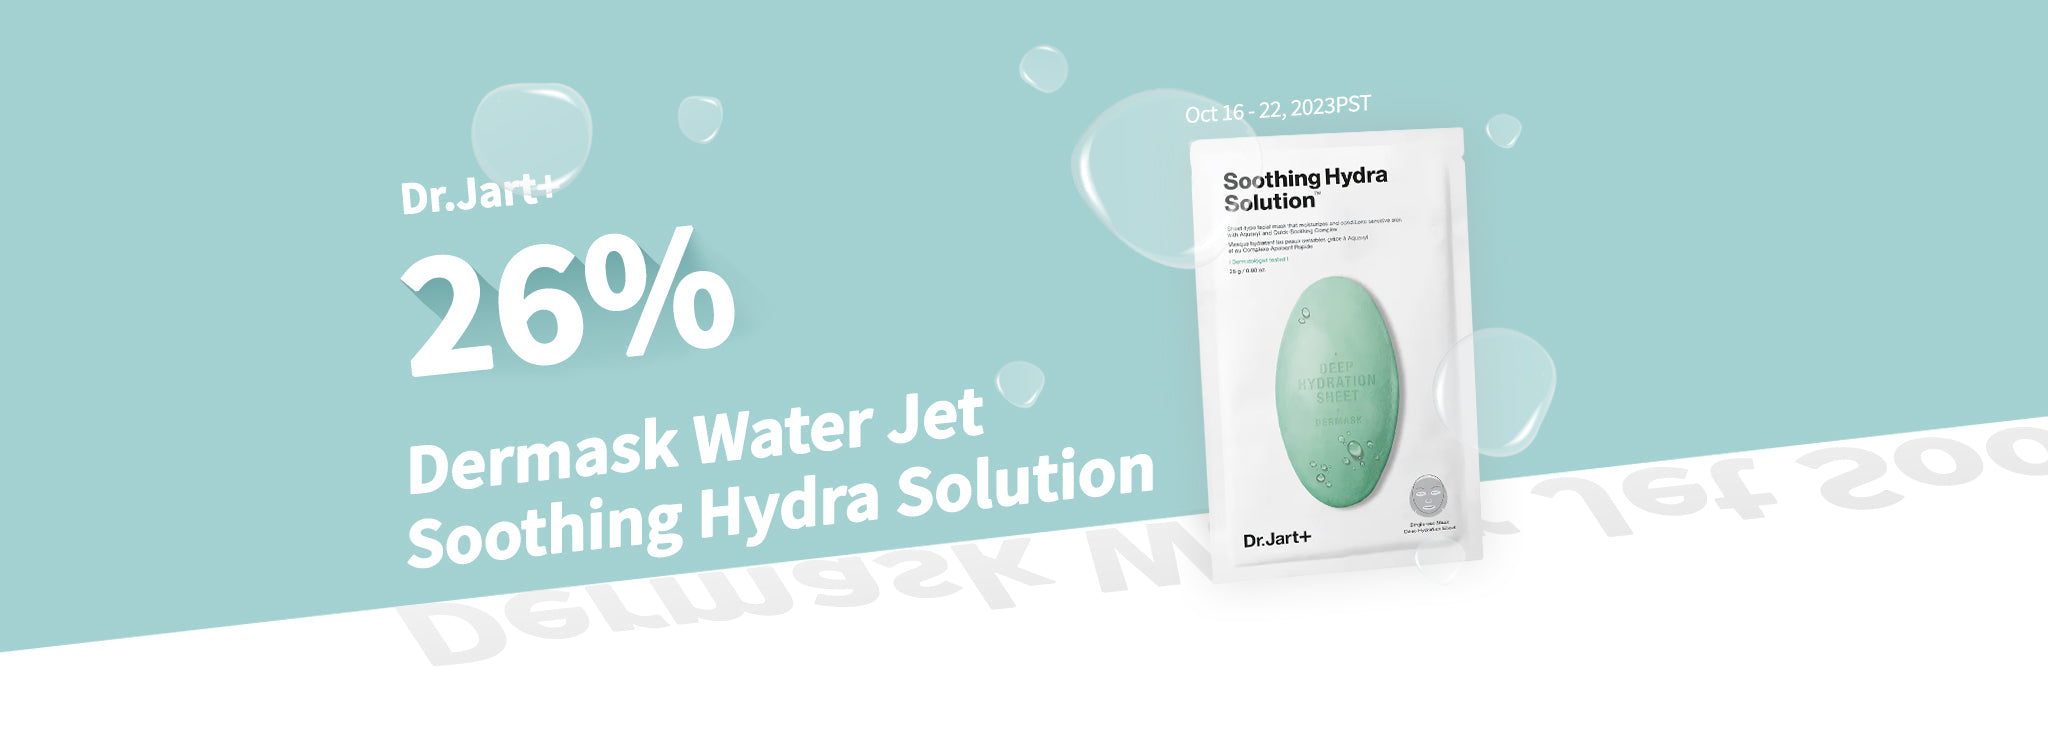 Dr.Jart+ Dermask Water Jet Soothing Hydra Solution Event **END